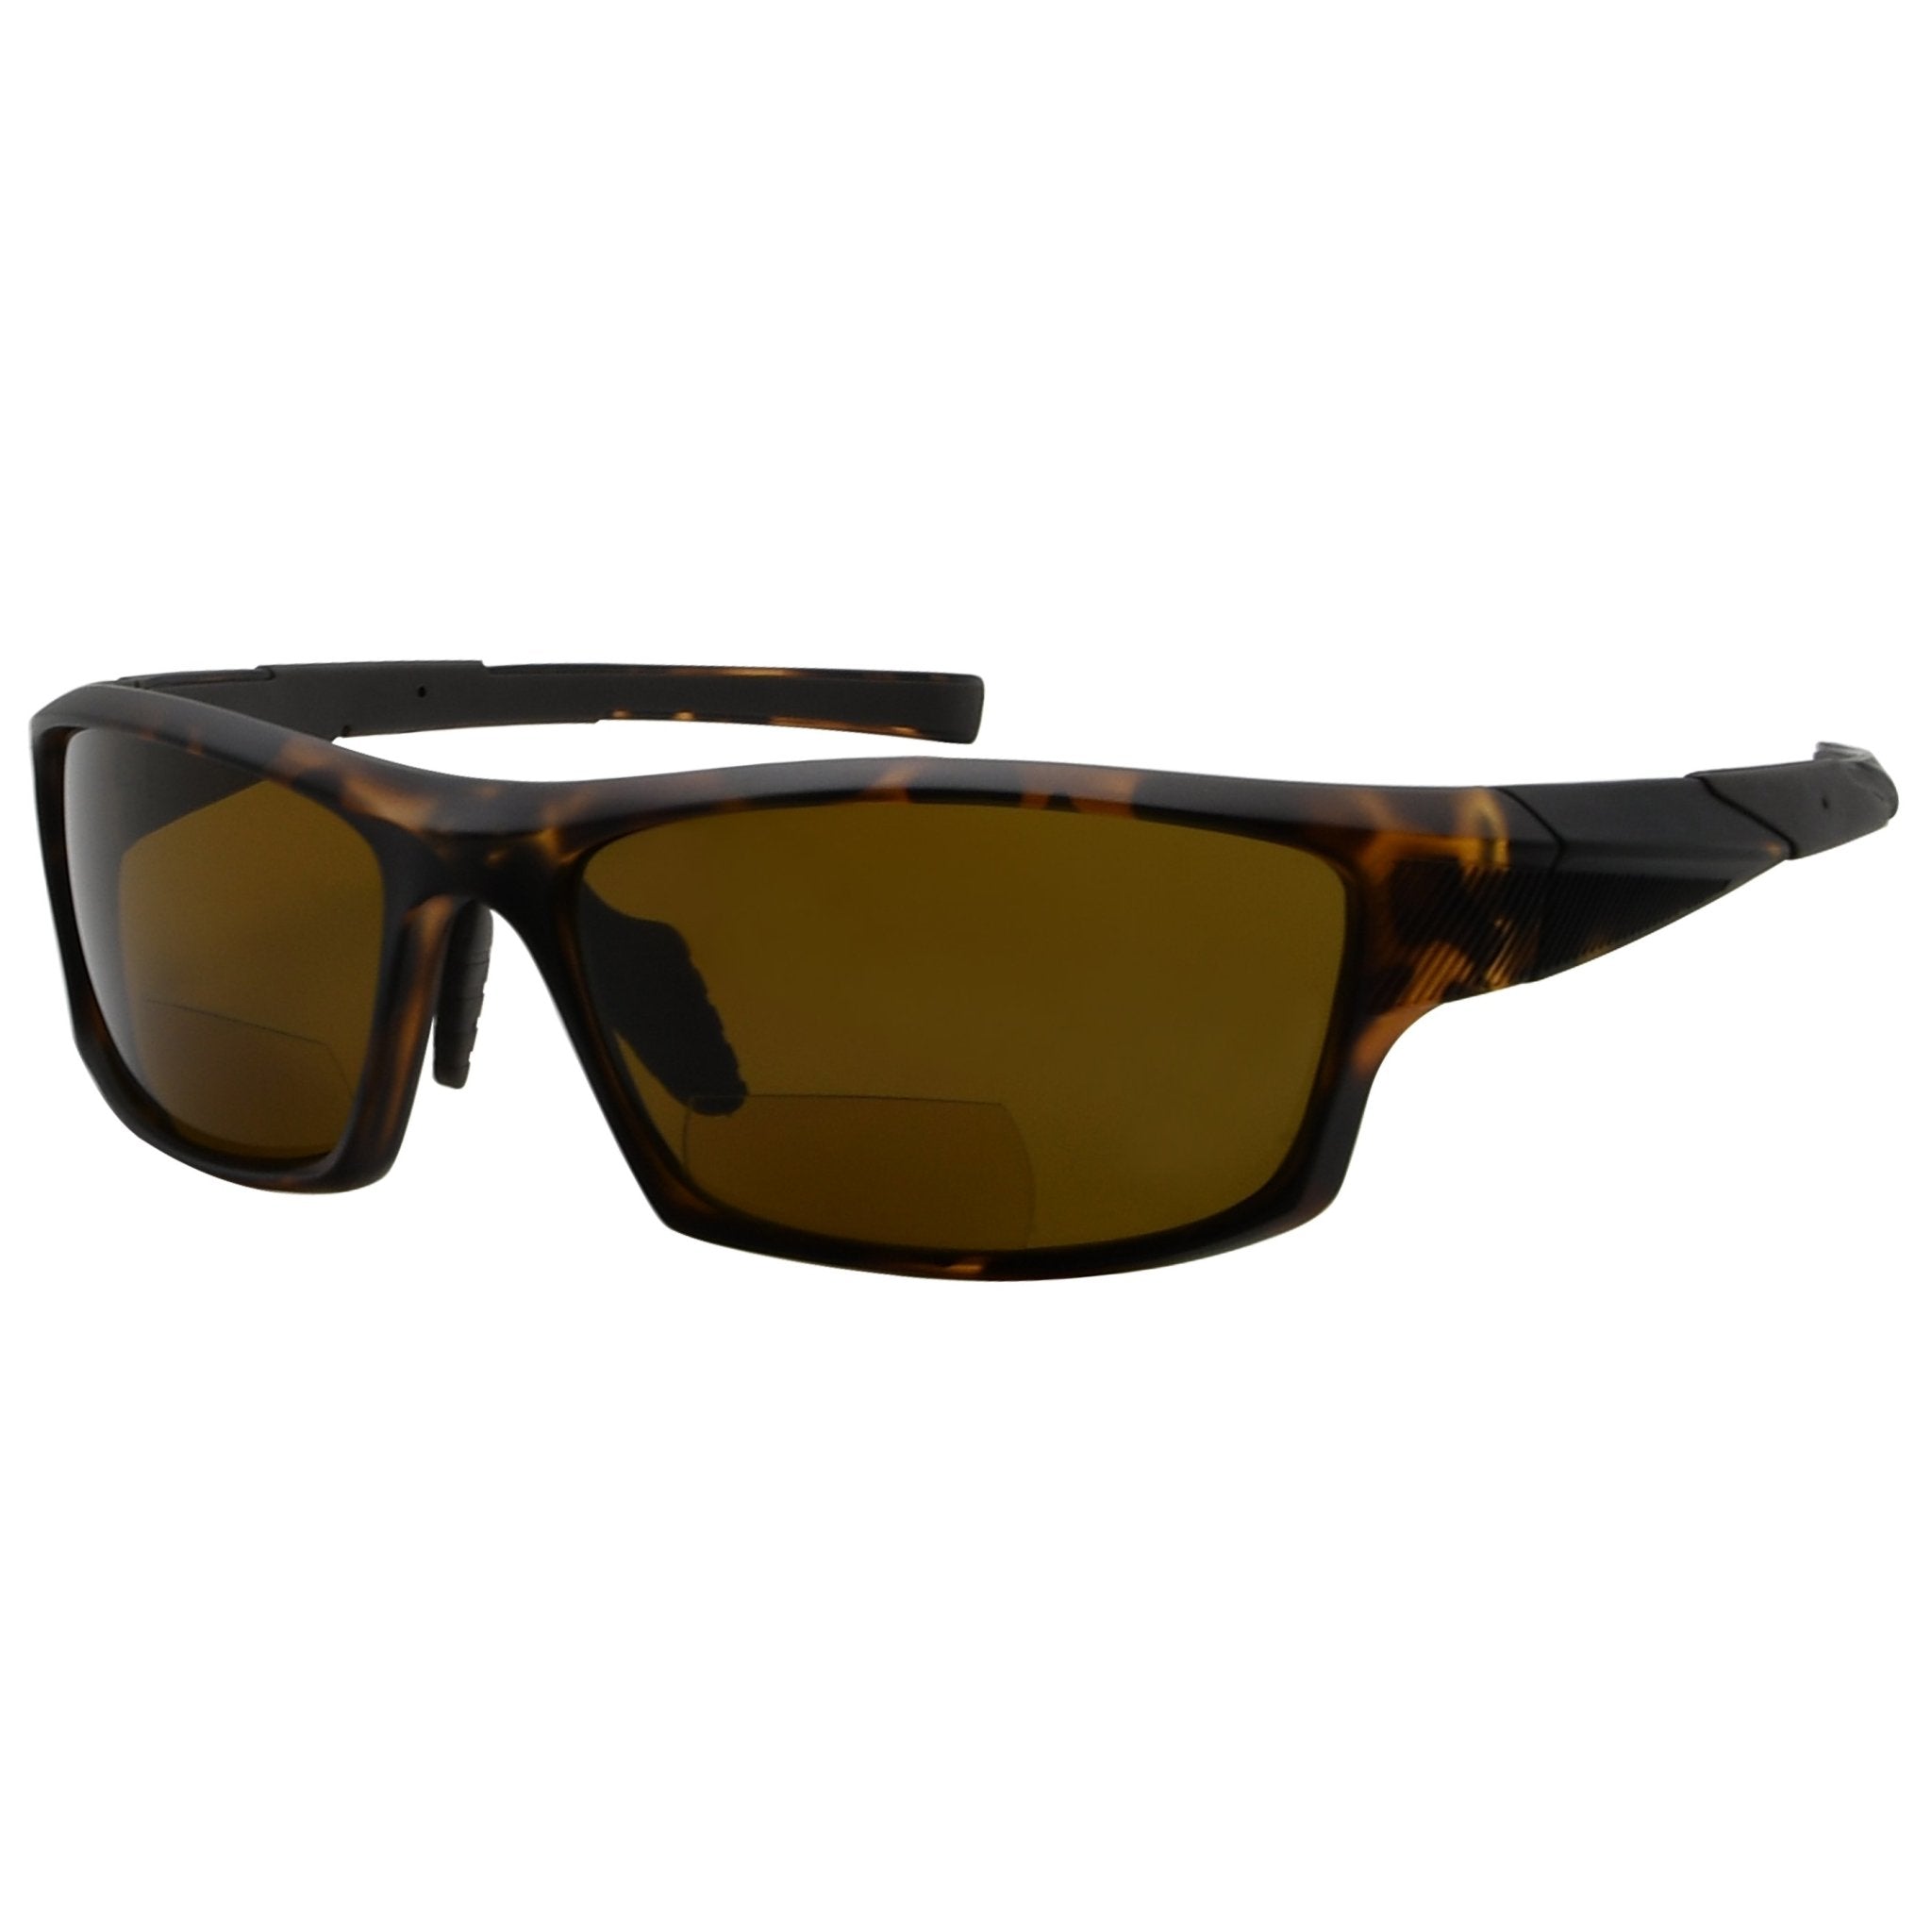 Polarized Bifocal Sunglasses Pilot Style Readers Women Men – eyekeeper.com